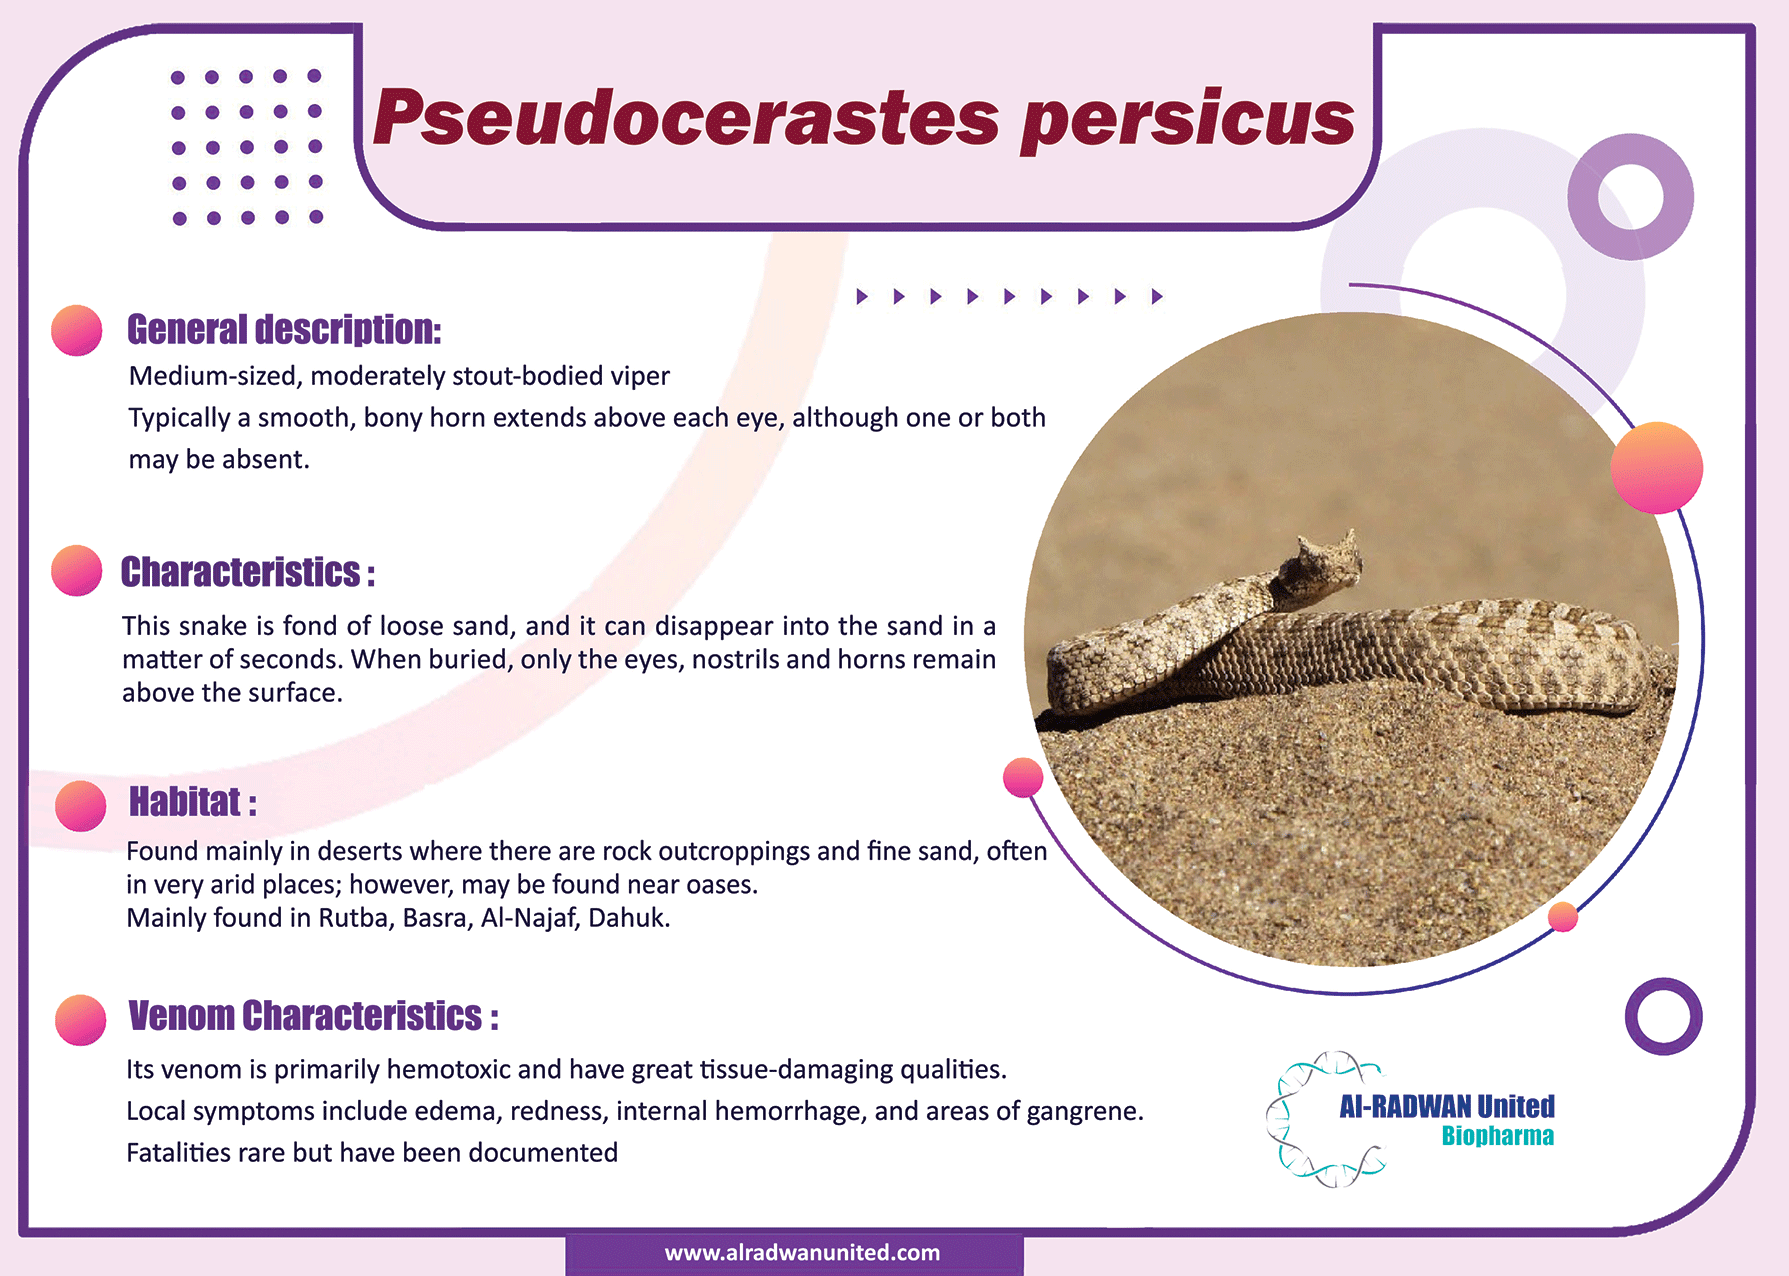 VENOMOUS SNAKES IN IRAQ (Pseudocerastes persicus)